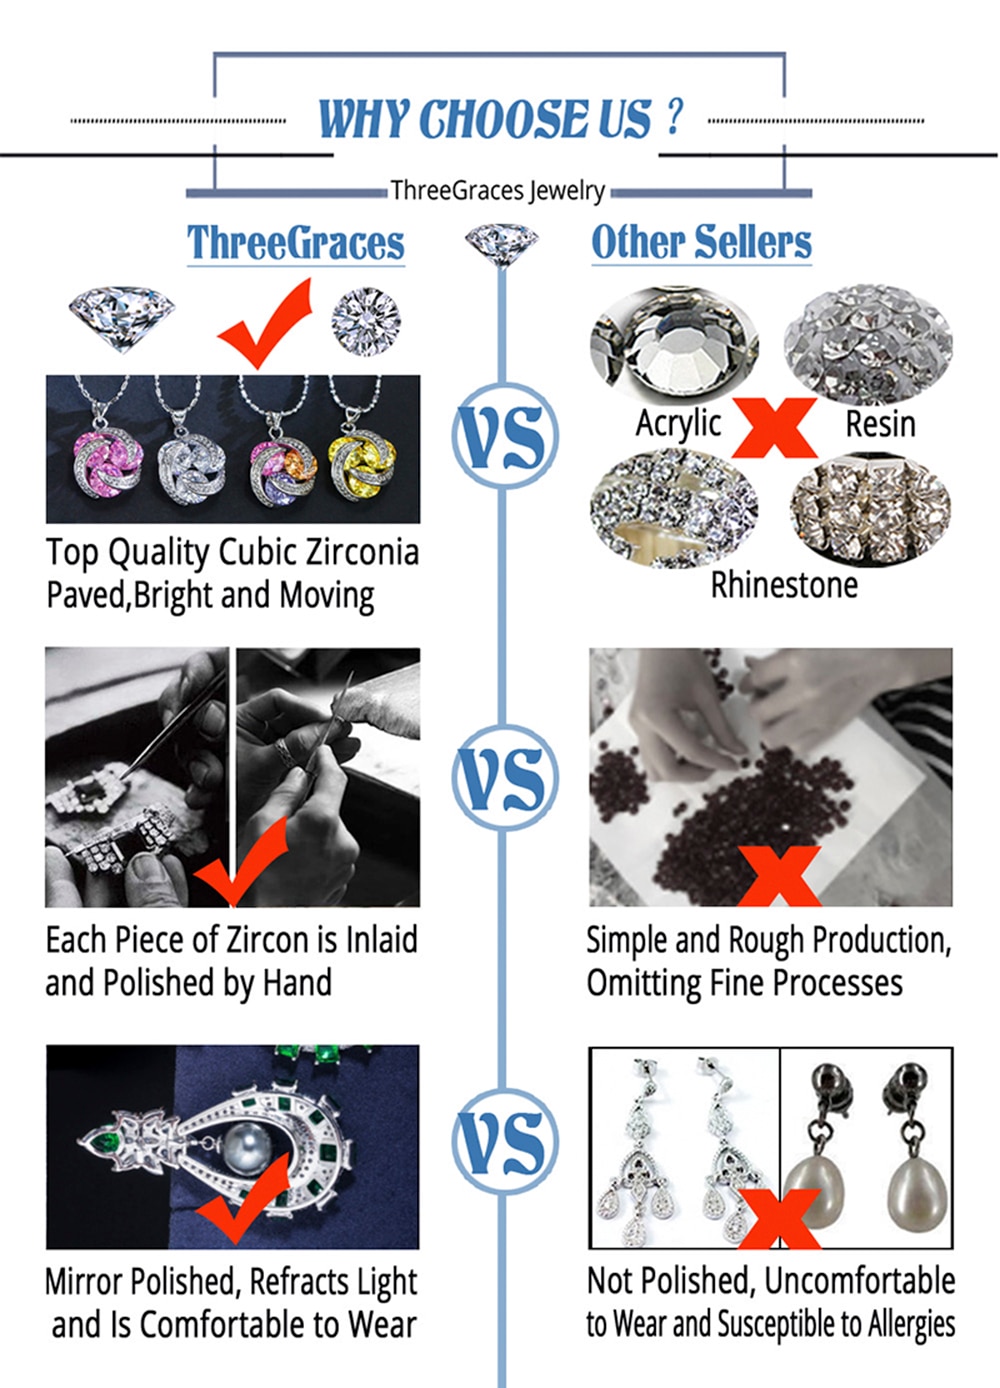 ThreeGraces-3pcs-Rainbow-CZ-Crystal-Round-Choker-Necklace-Earrings-Bracelet-Set-for-Women-Elegant-Br-1005002597410769-10